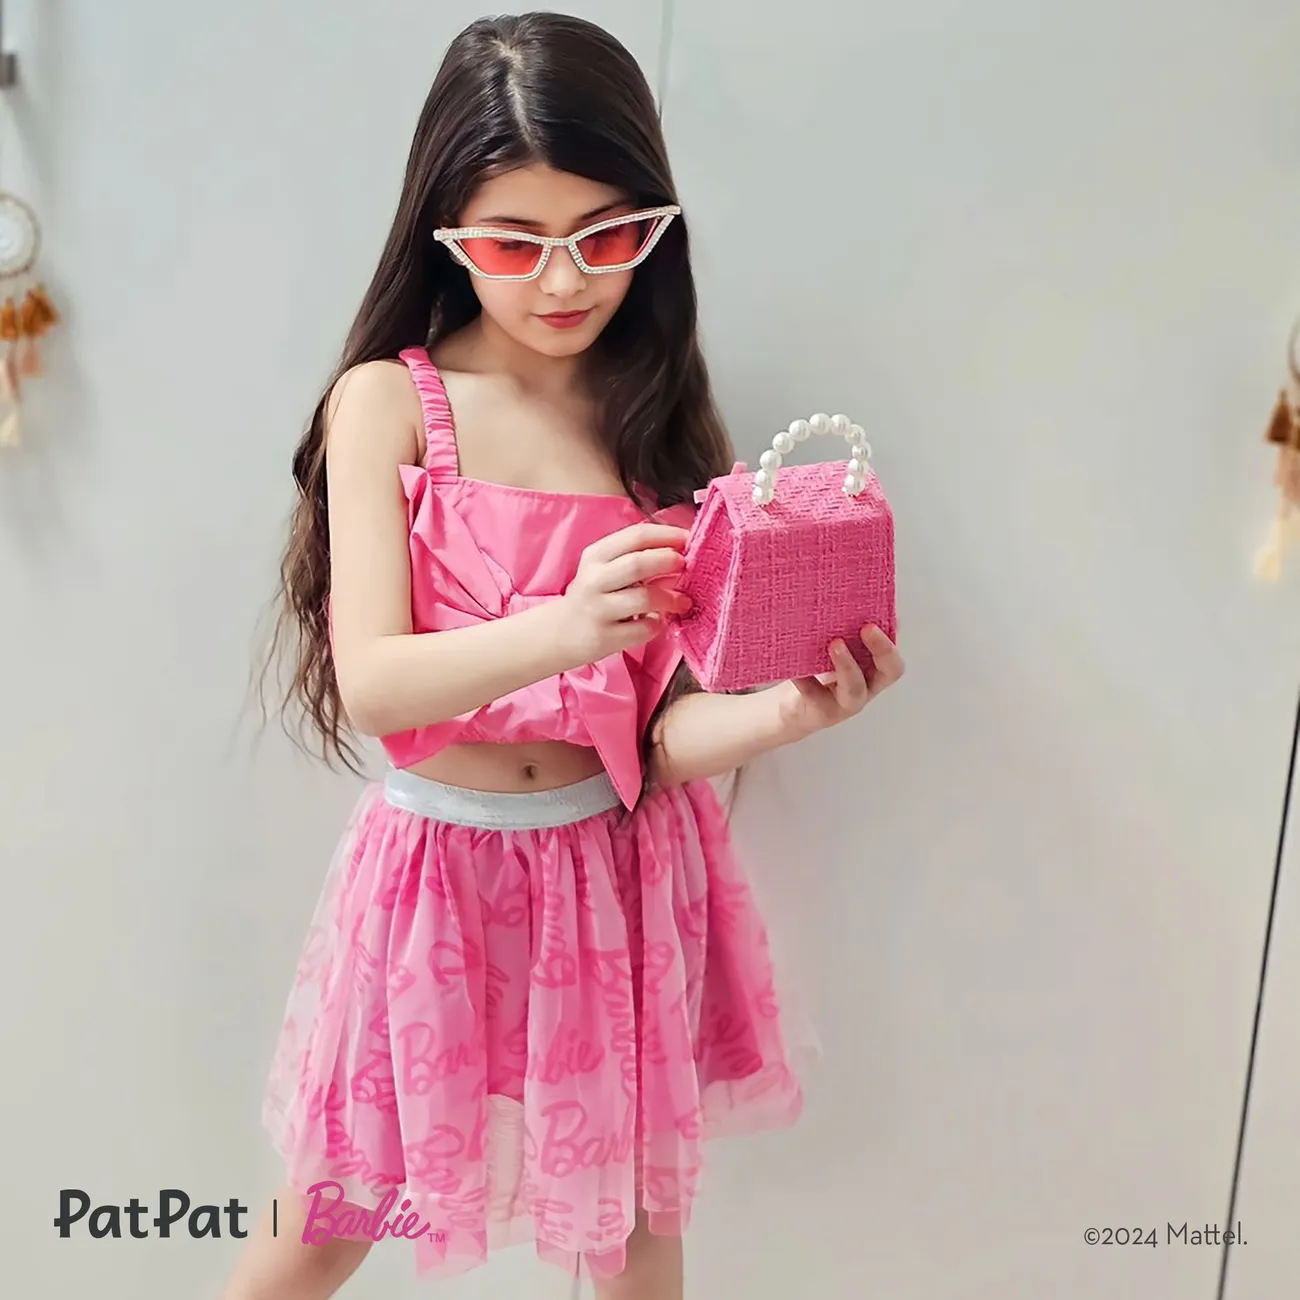 Barbie 2pcs Toddler Girl Bow Twist Top and Allover Logo Print Skirt Set
 Roseo big image 1